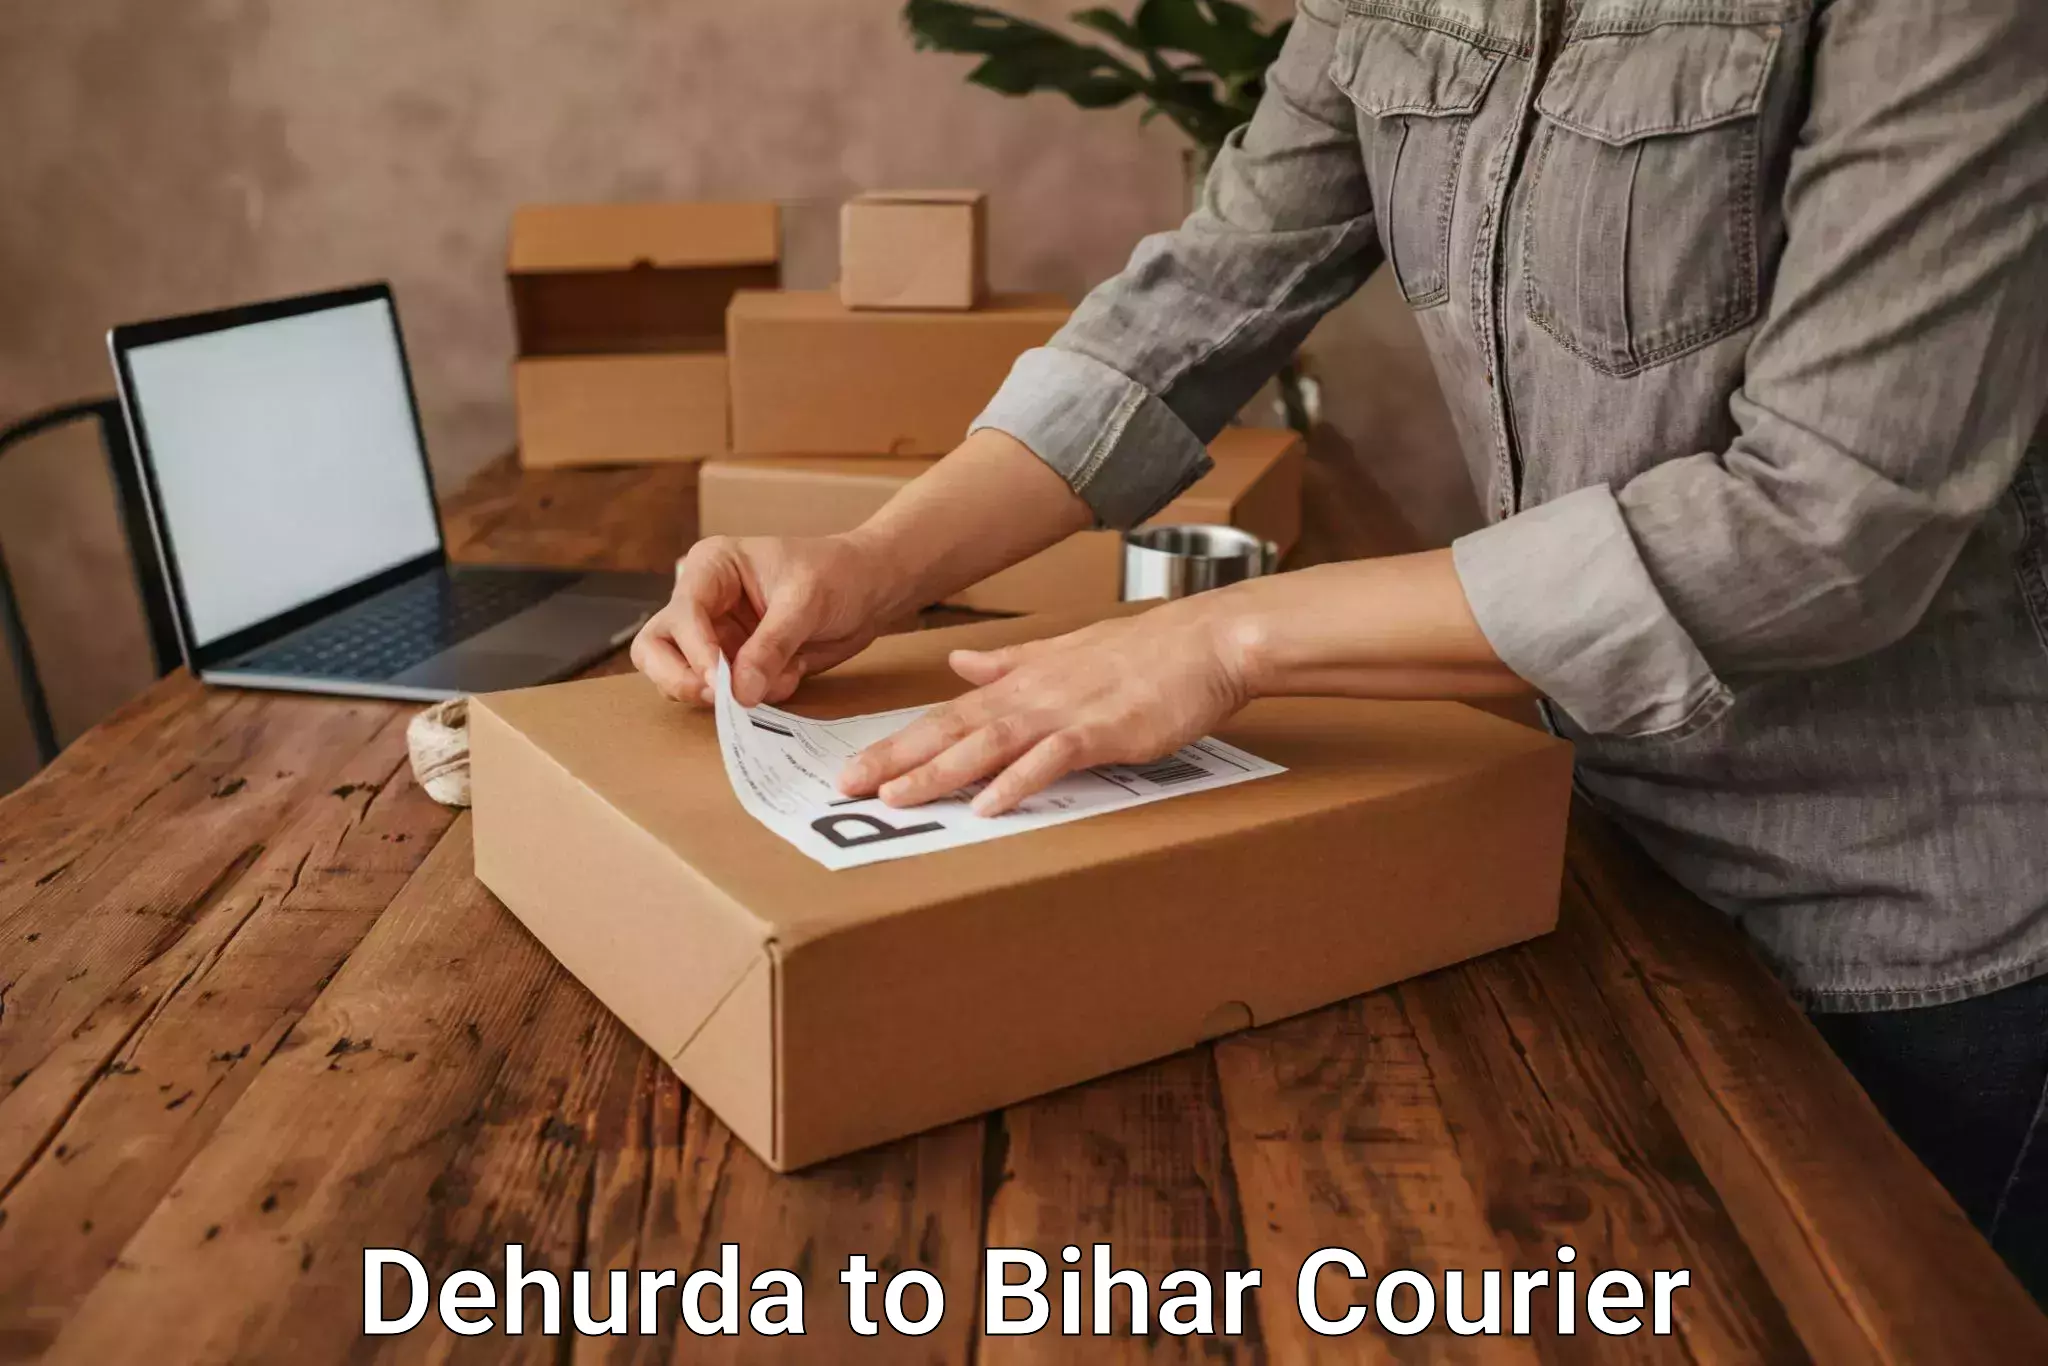 Courier service comparison Dehurda to Fatwah